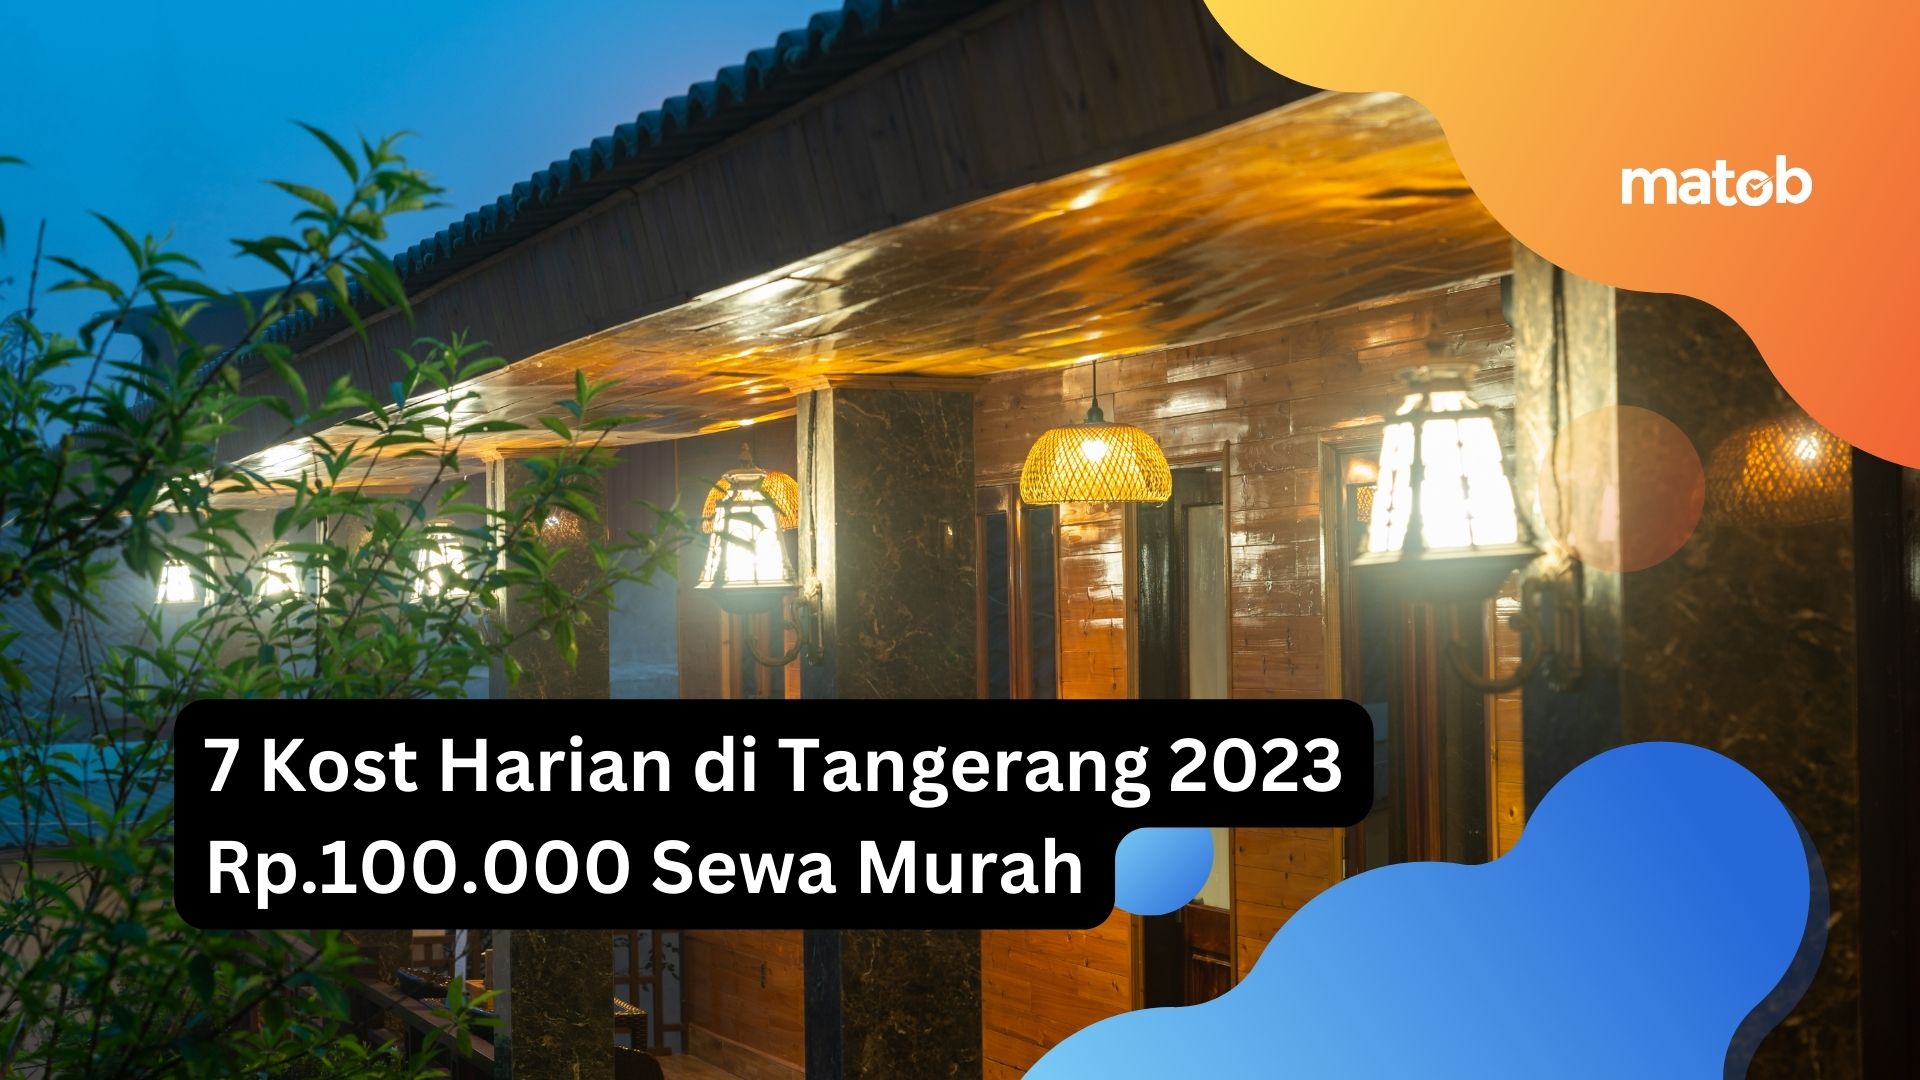 7 Kost Harian di Tangerang 2023 Rp.100.000 Sewa Murah